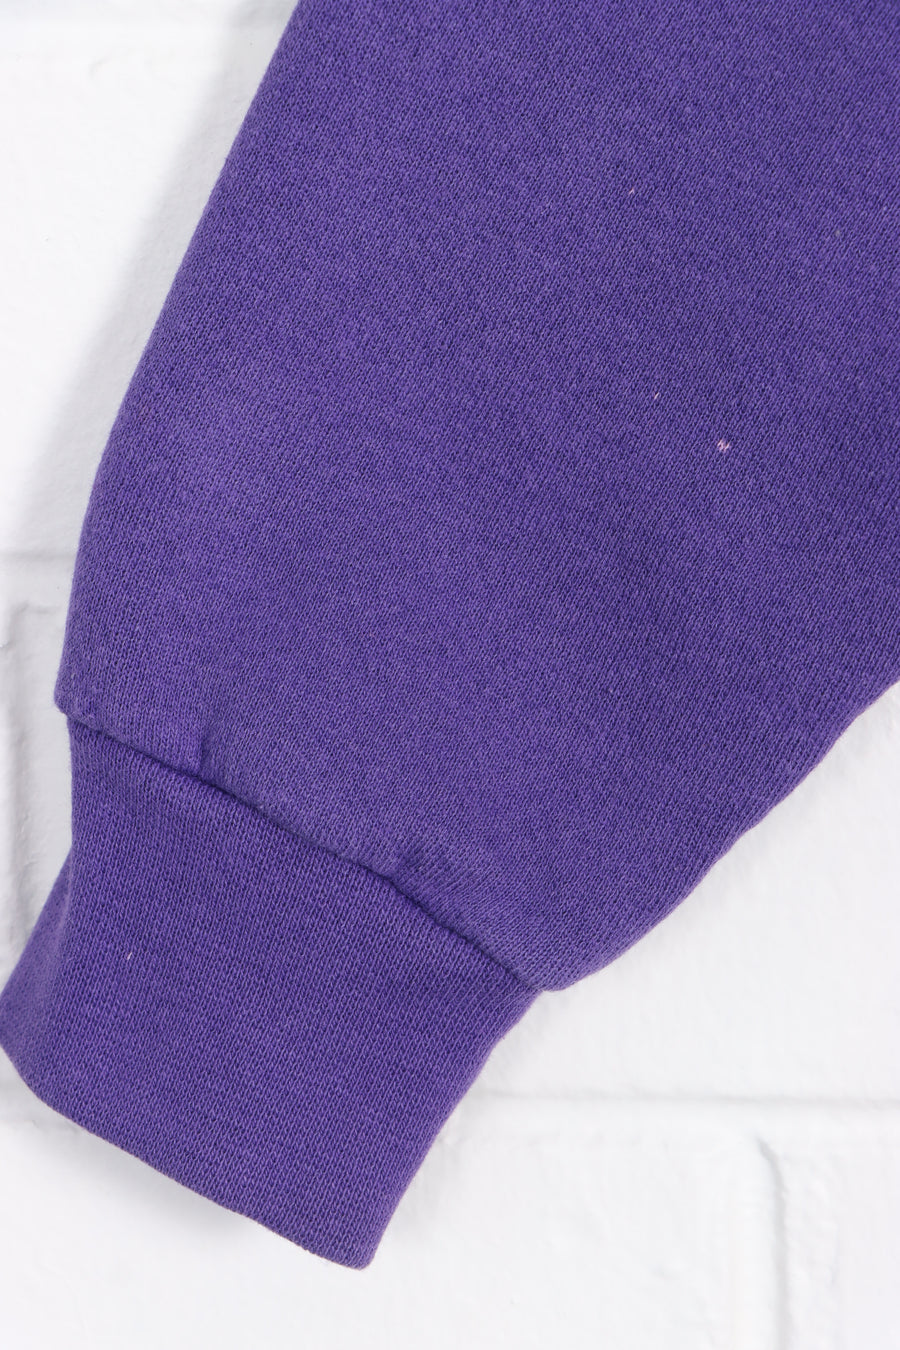 Westminster College Alumni Embroidered Purple Sweatshirt USA Made (S-M)